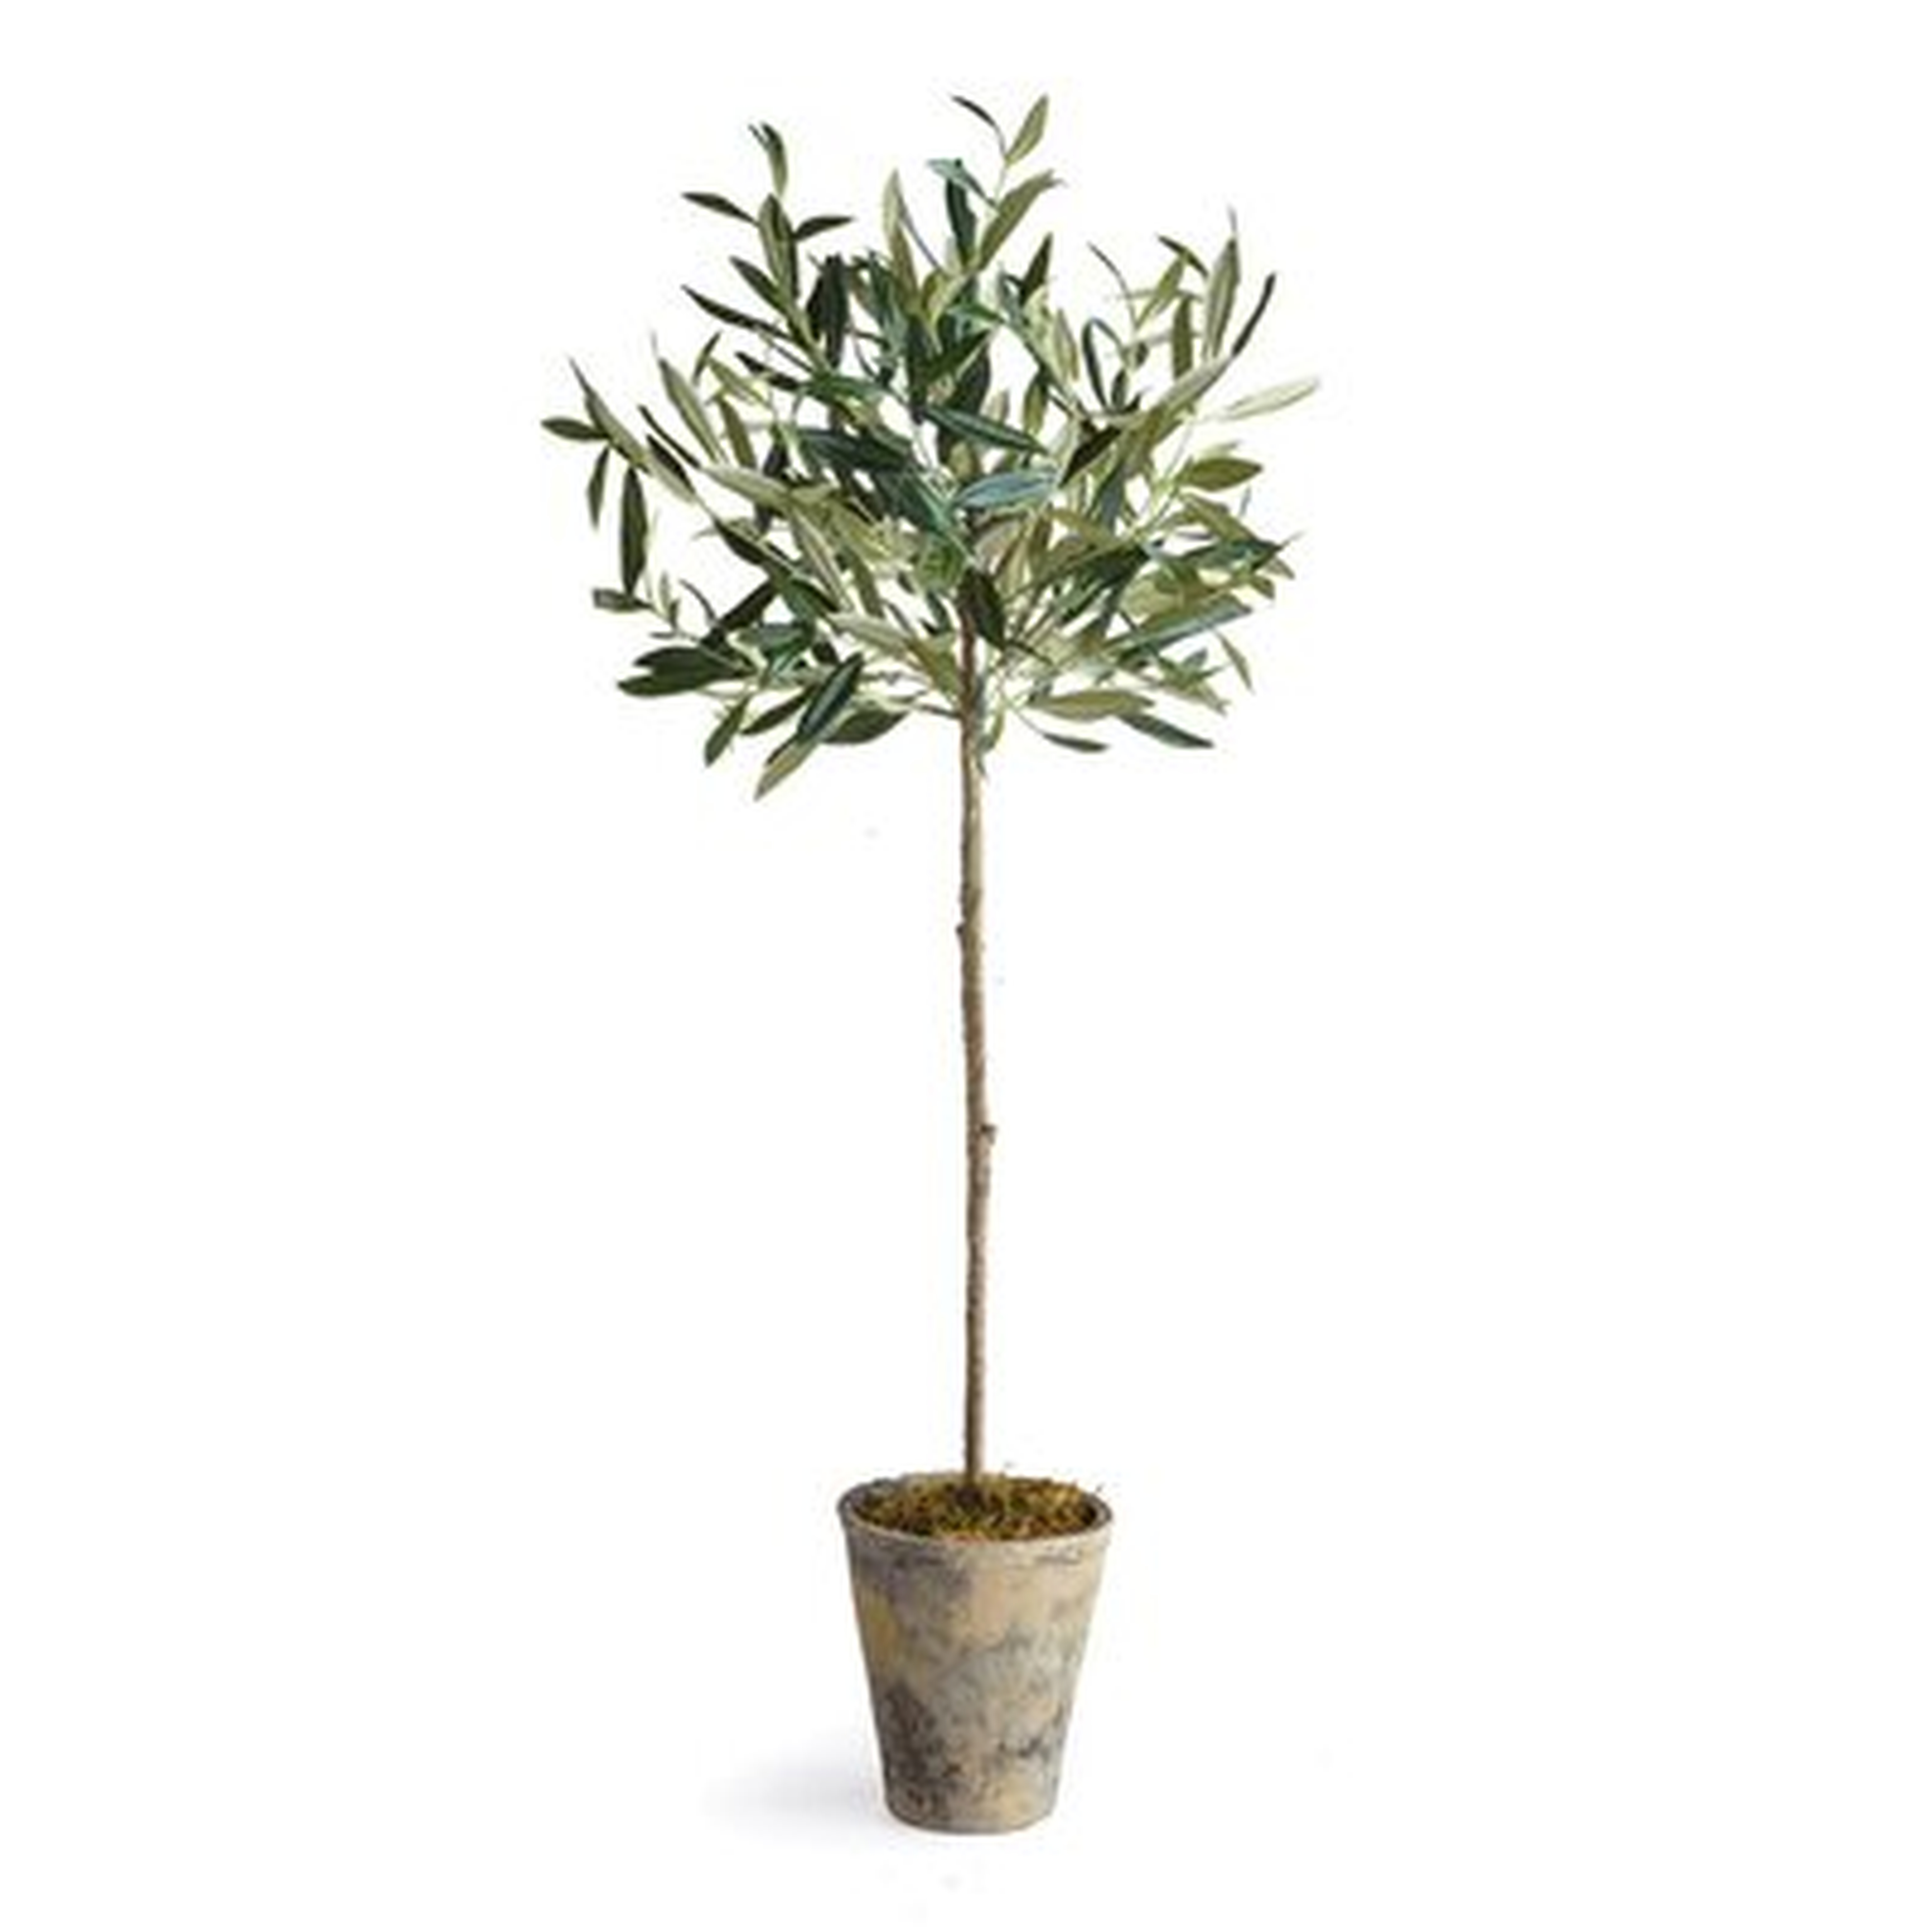 Olive Tree in Planter - in stock 4/9/21 - Wayfair